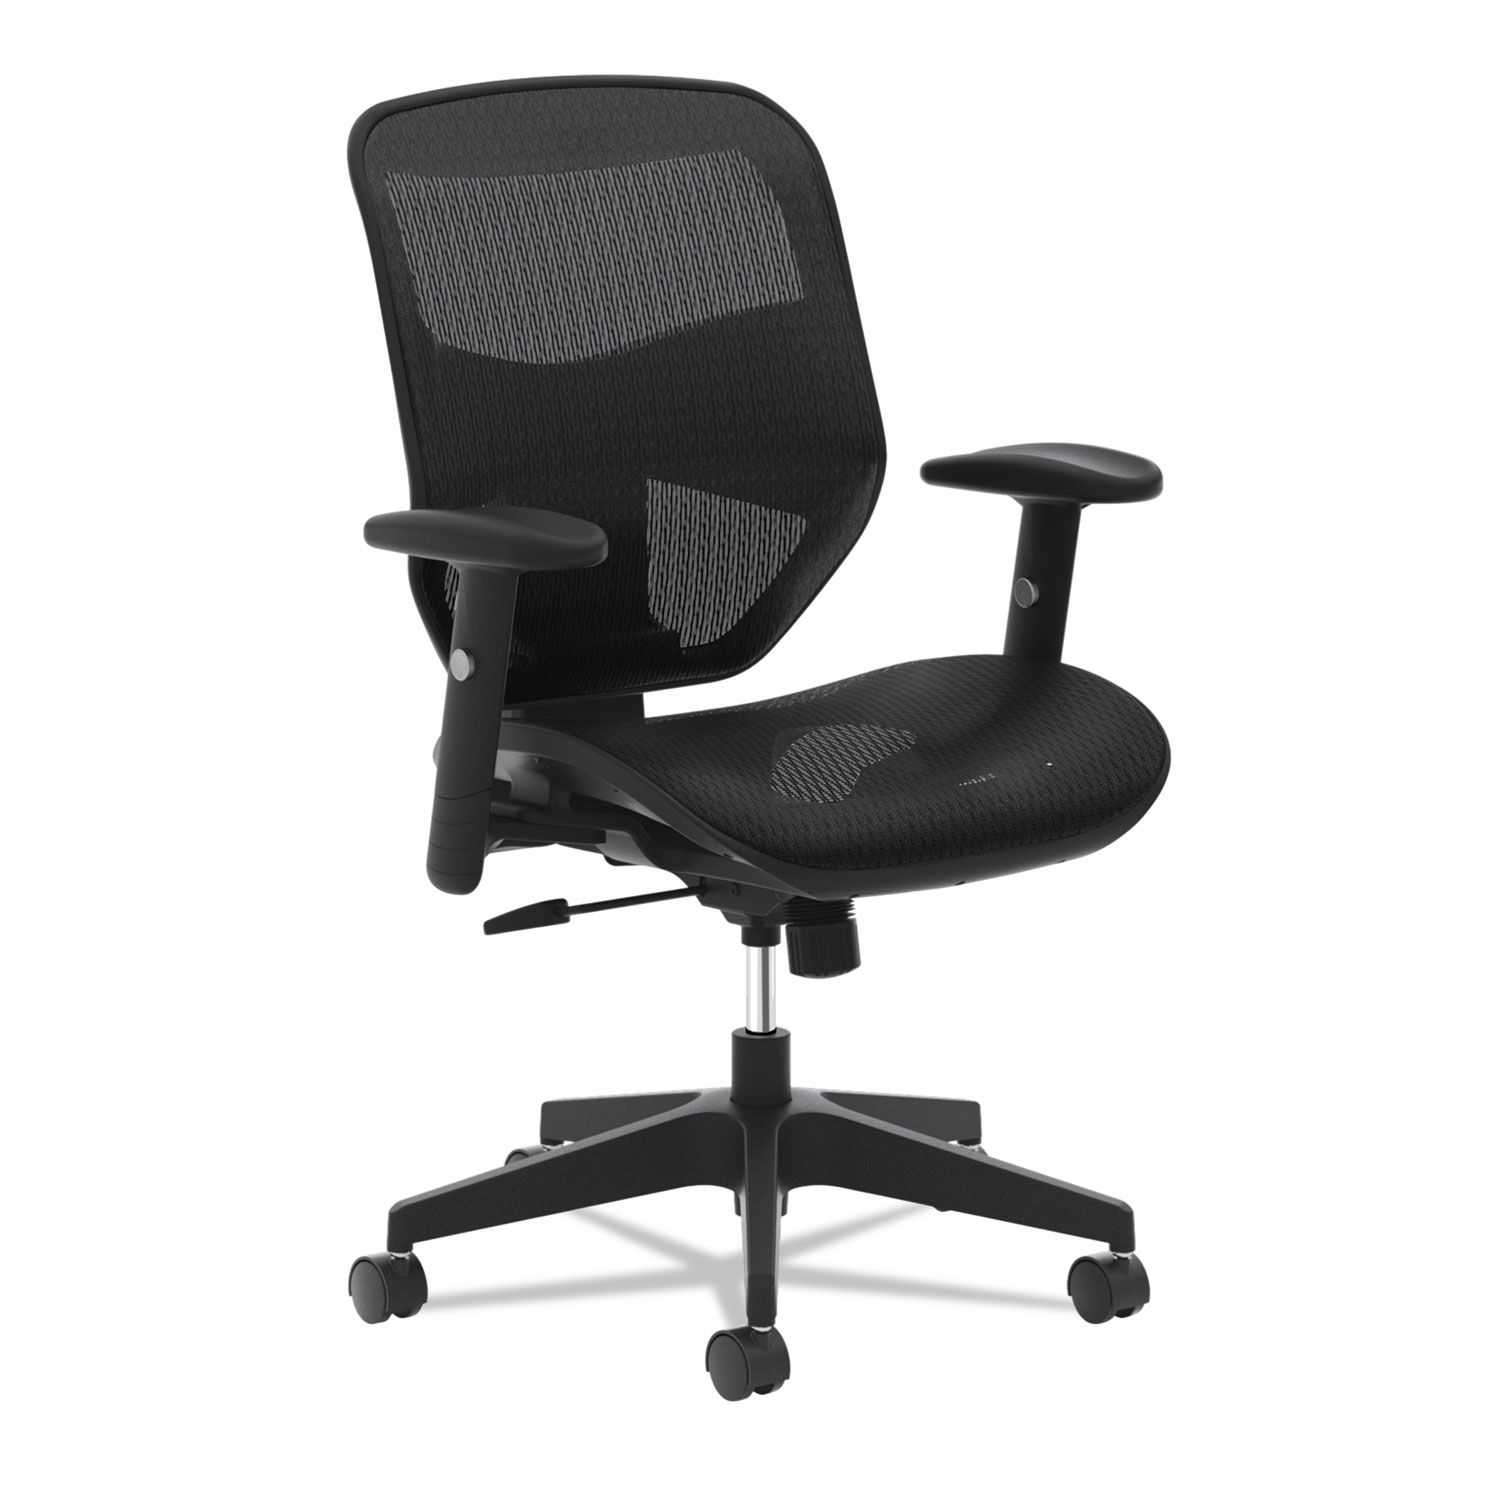  HON HVL534.MST3 VL534 Mesh High-Back Task Chair, Supports up to 250 lbs., Black Seat/Black Back, Black Base (BSXVL534MST3) 